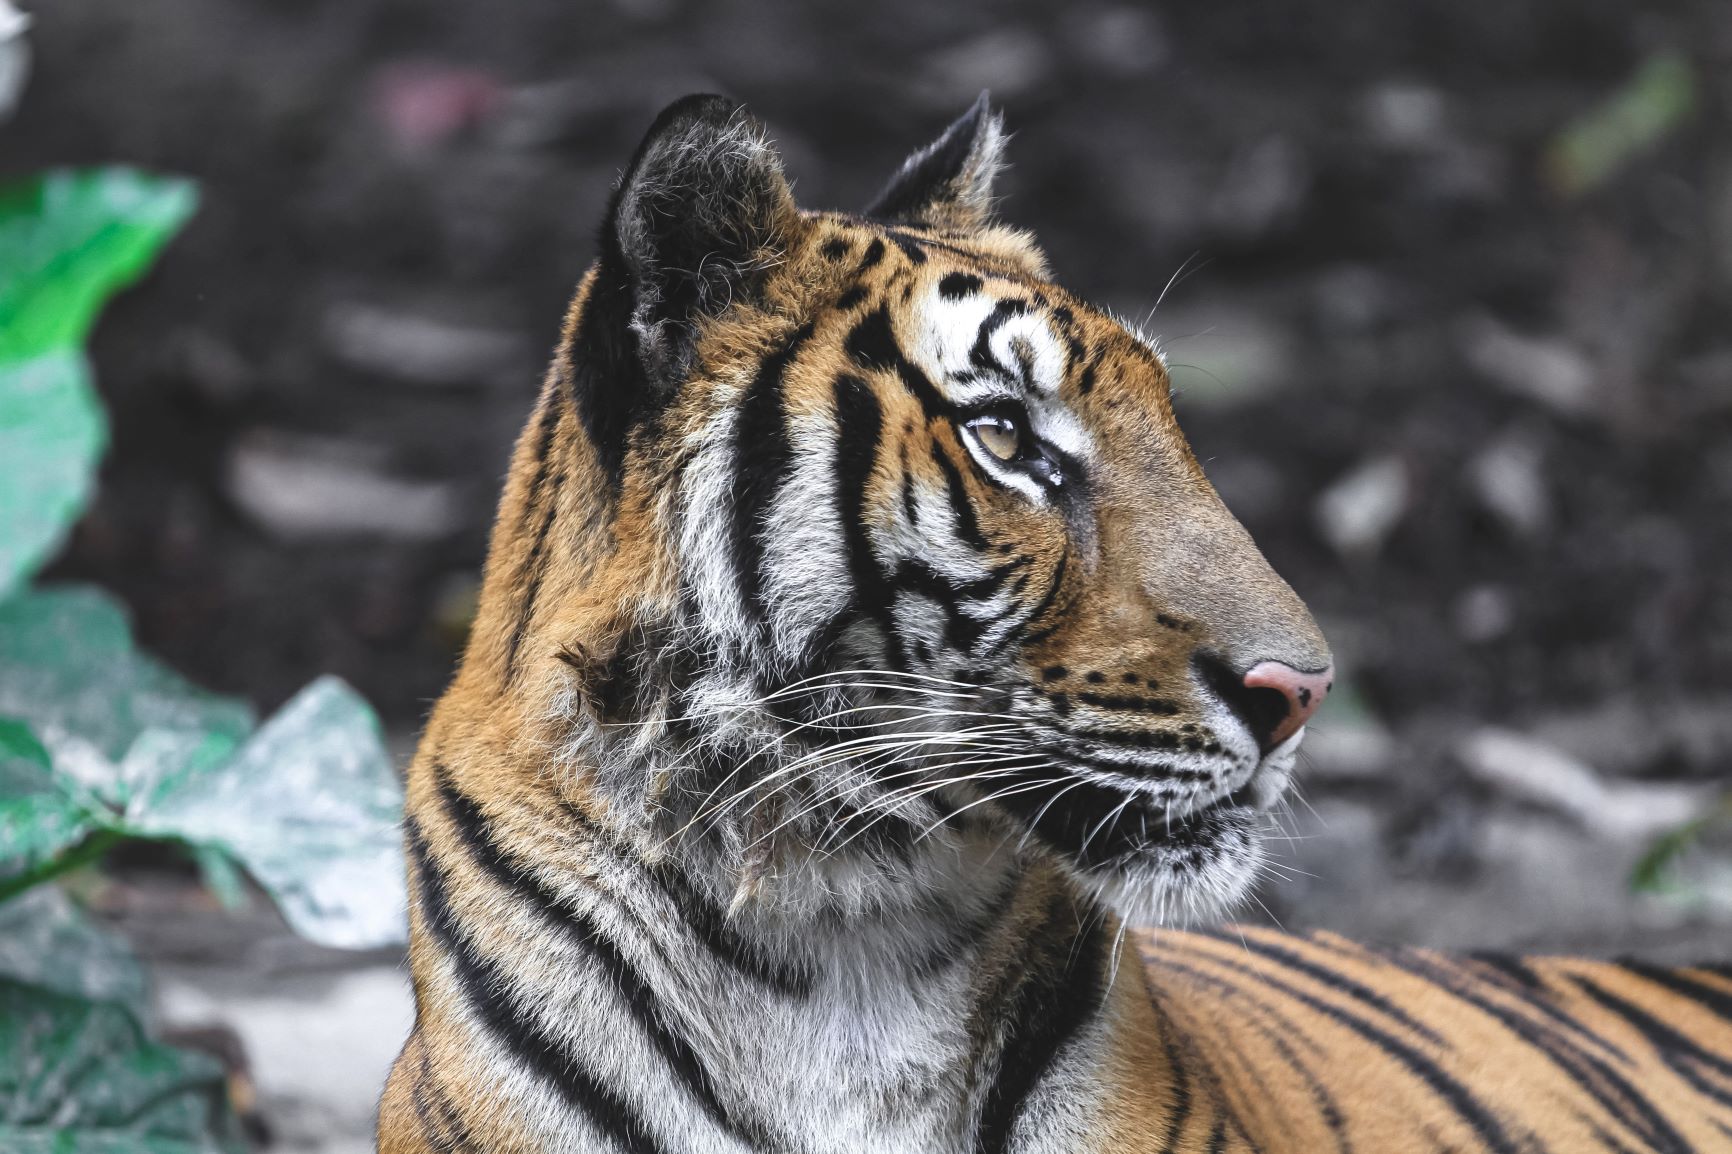 Saving Tigers in Nepal – Bhim’s Lifelong Mission